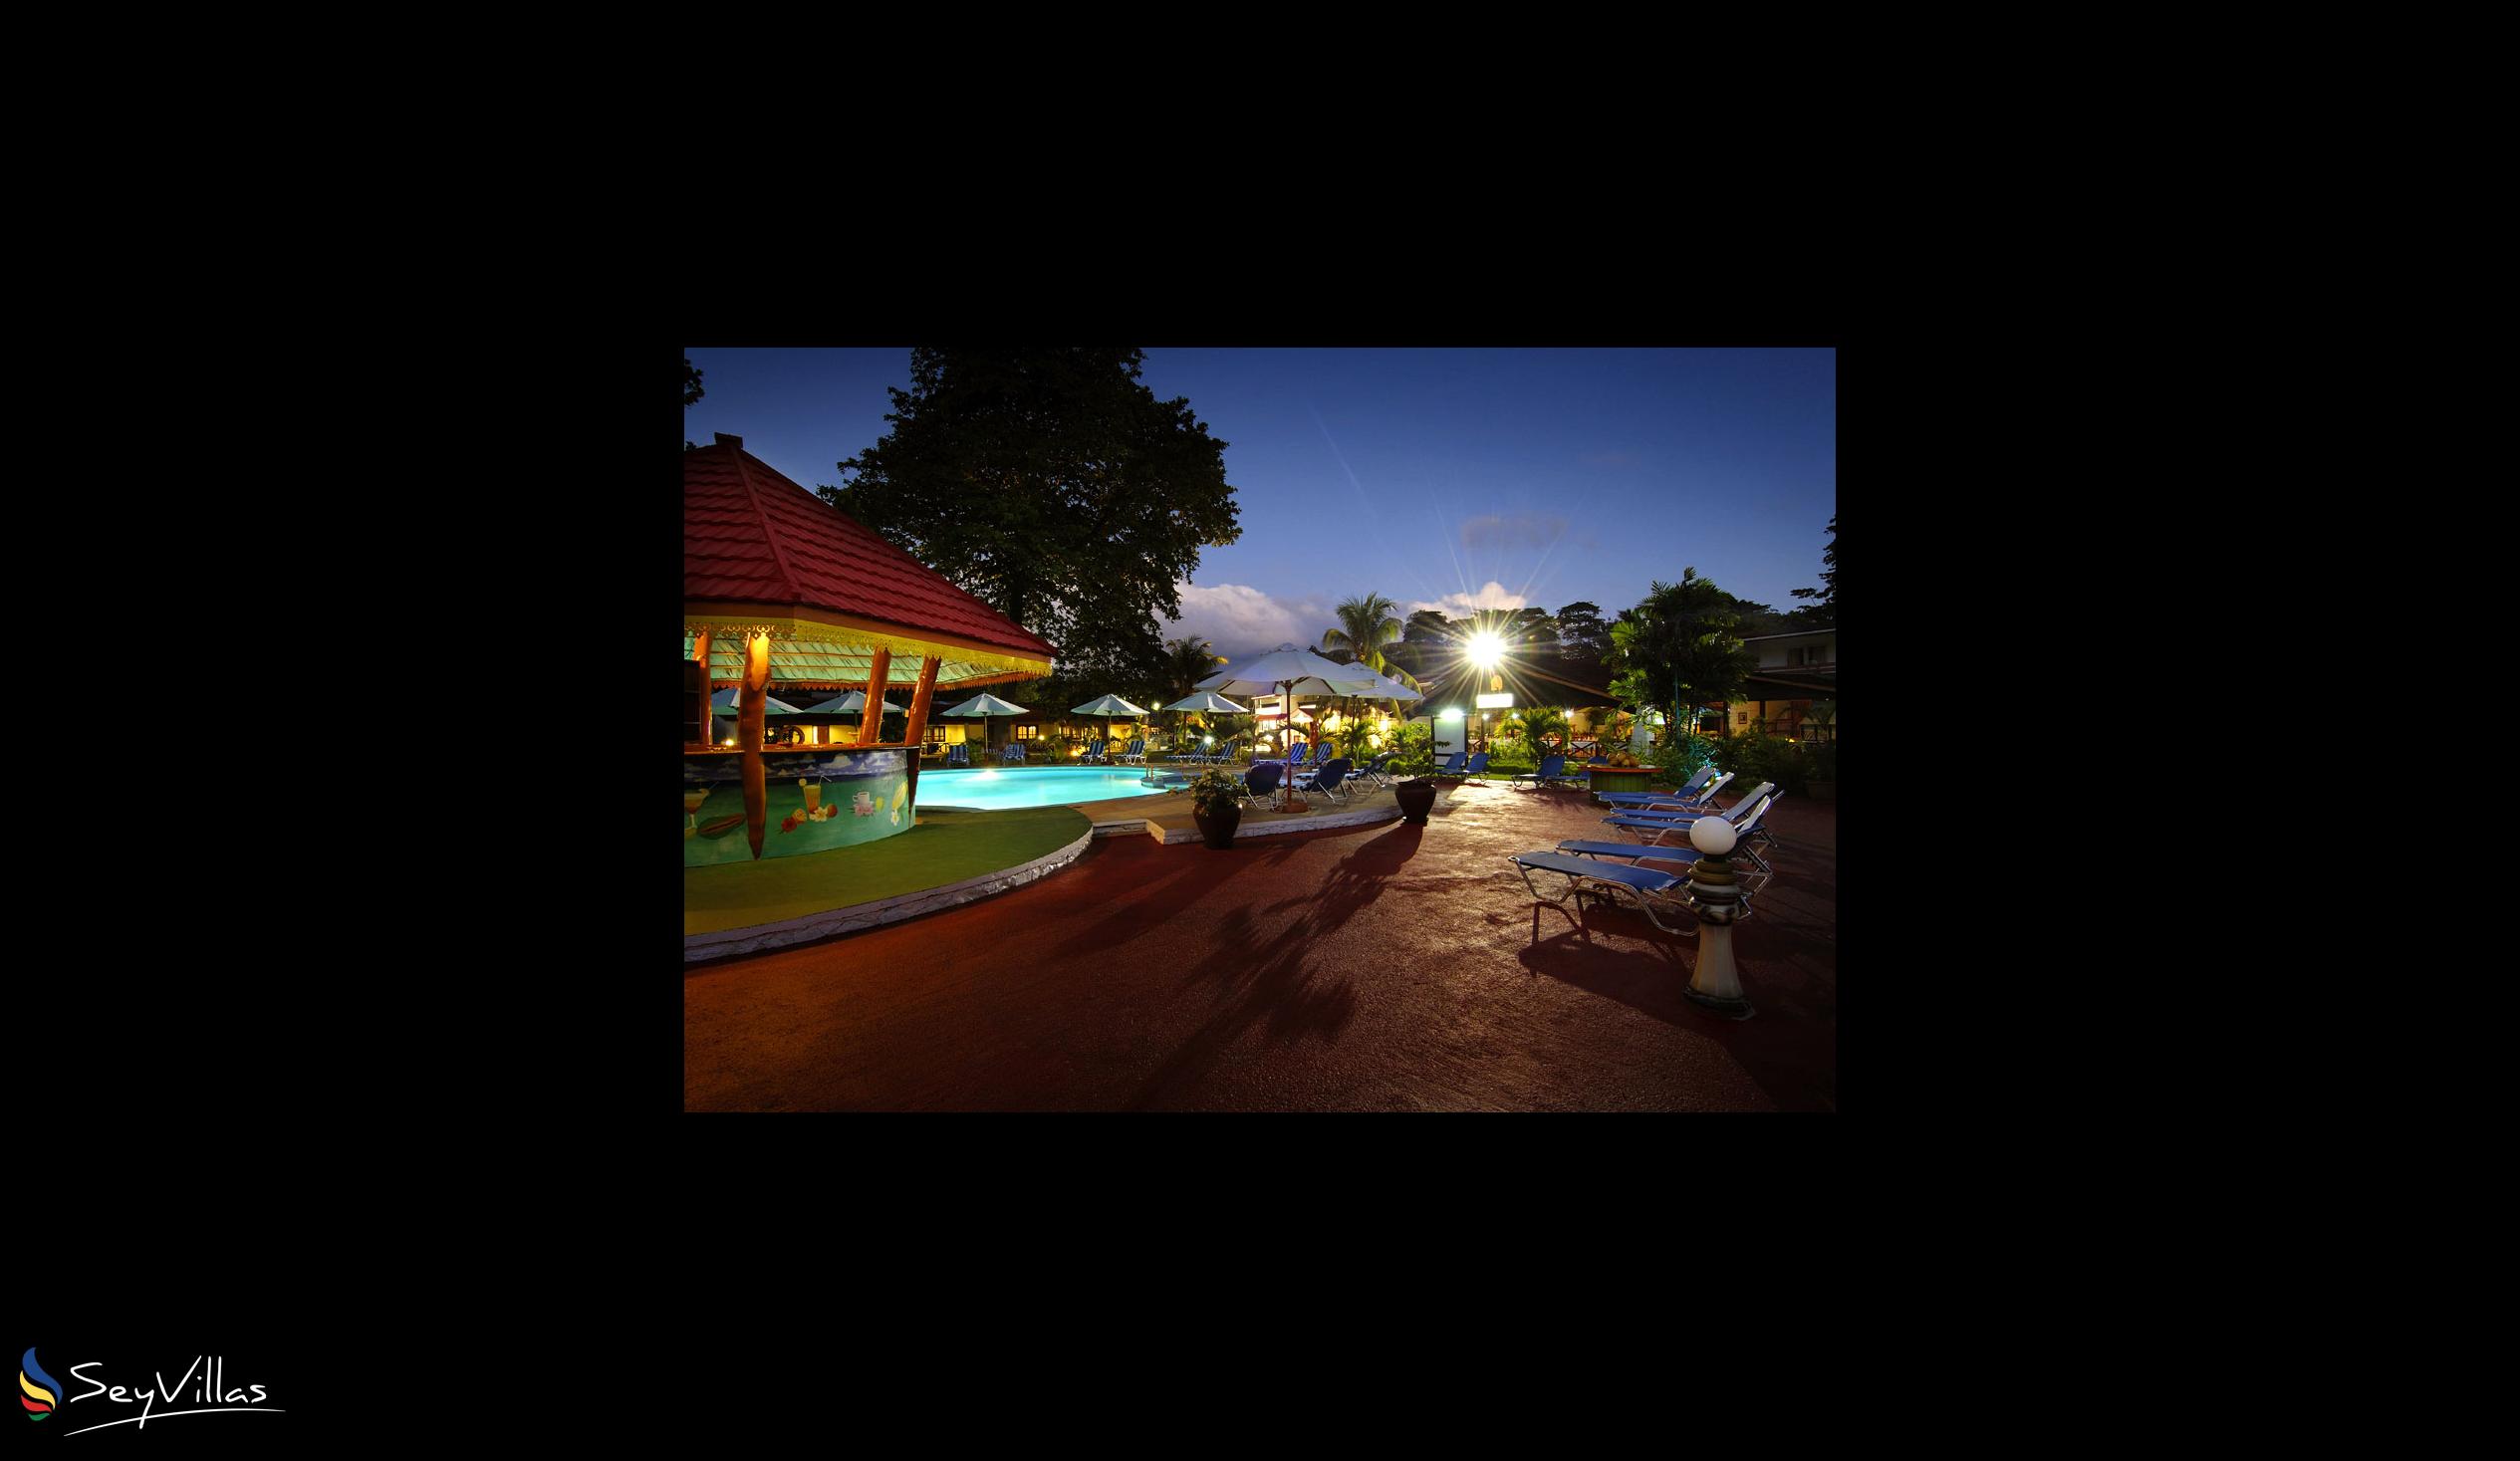 Photo 7: Berjaya Praslin Resort - Outdoor area - Praslin (Seychelles)